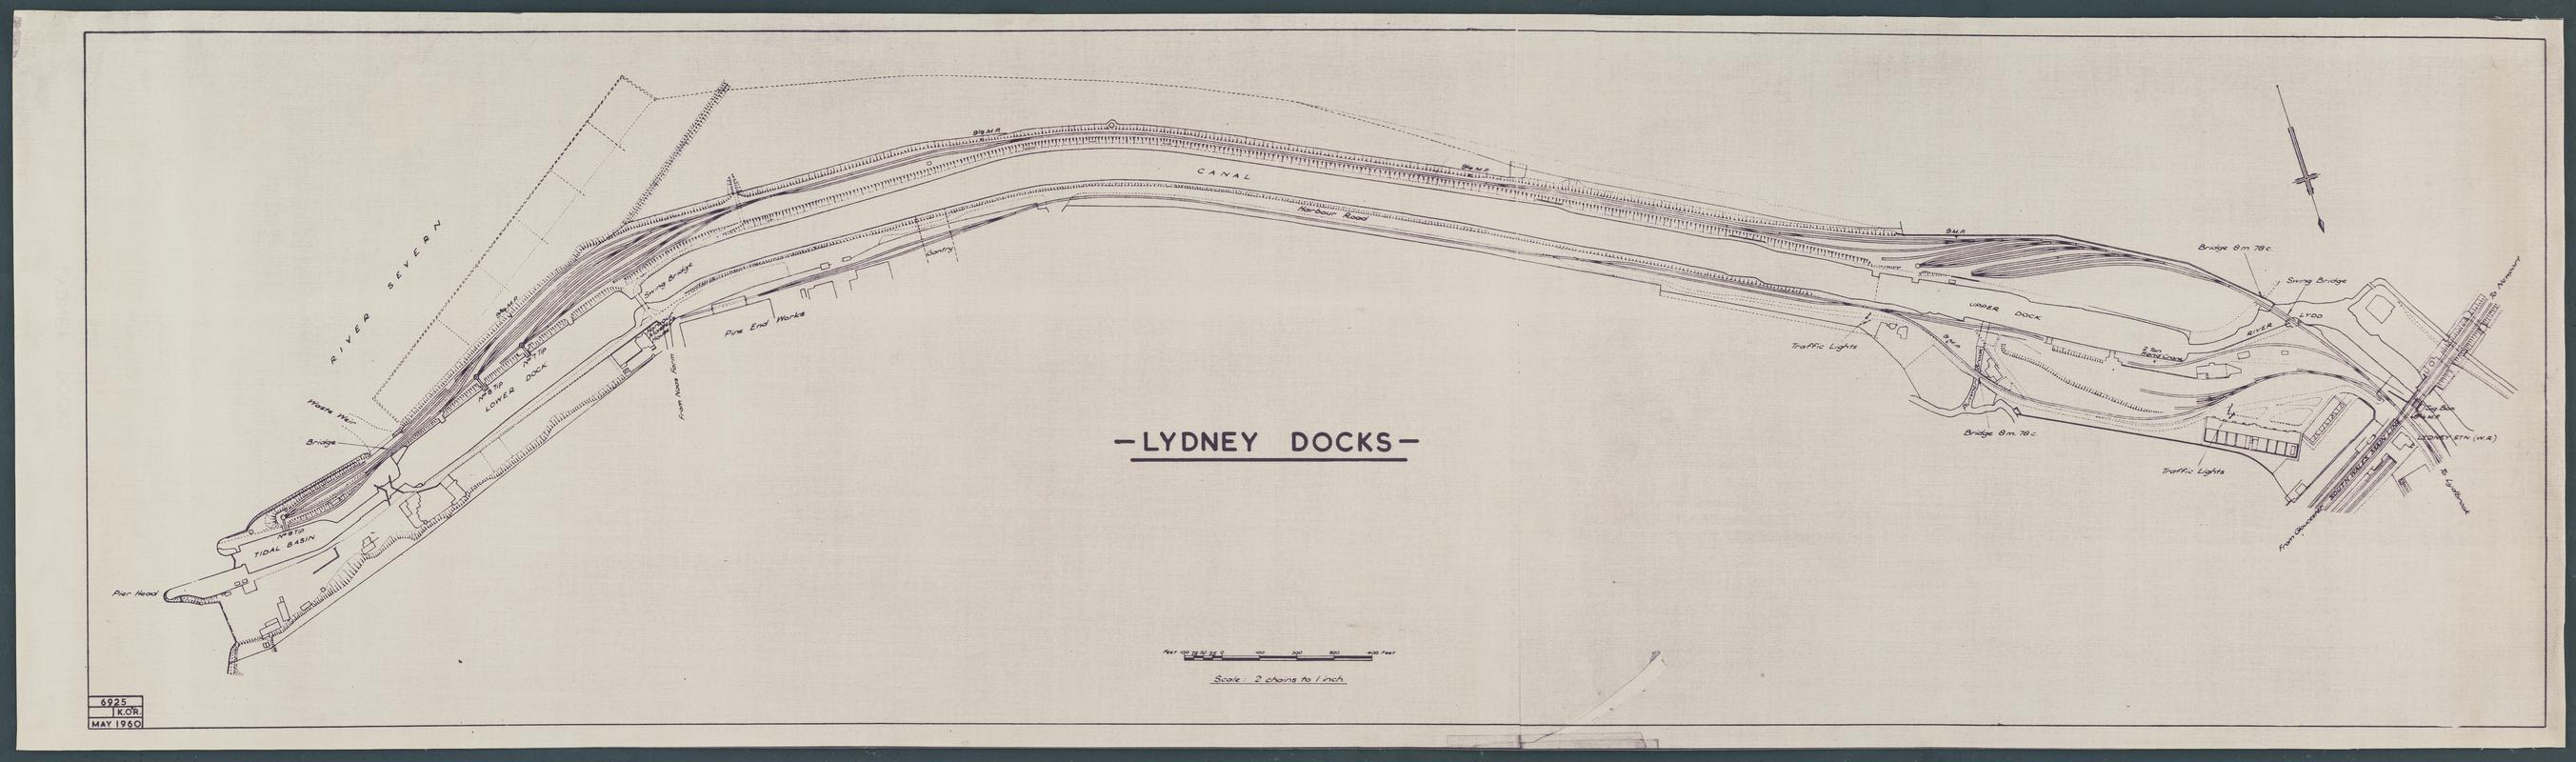 Lydney Docks (plan)